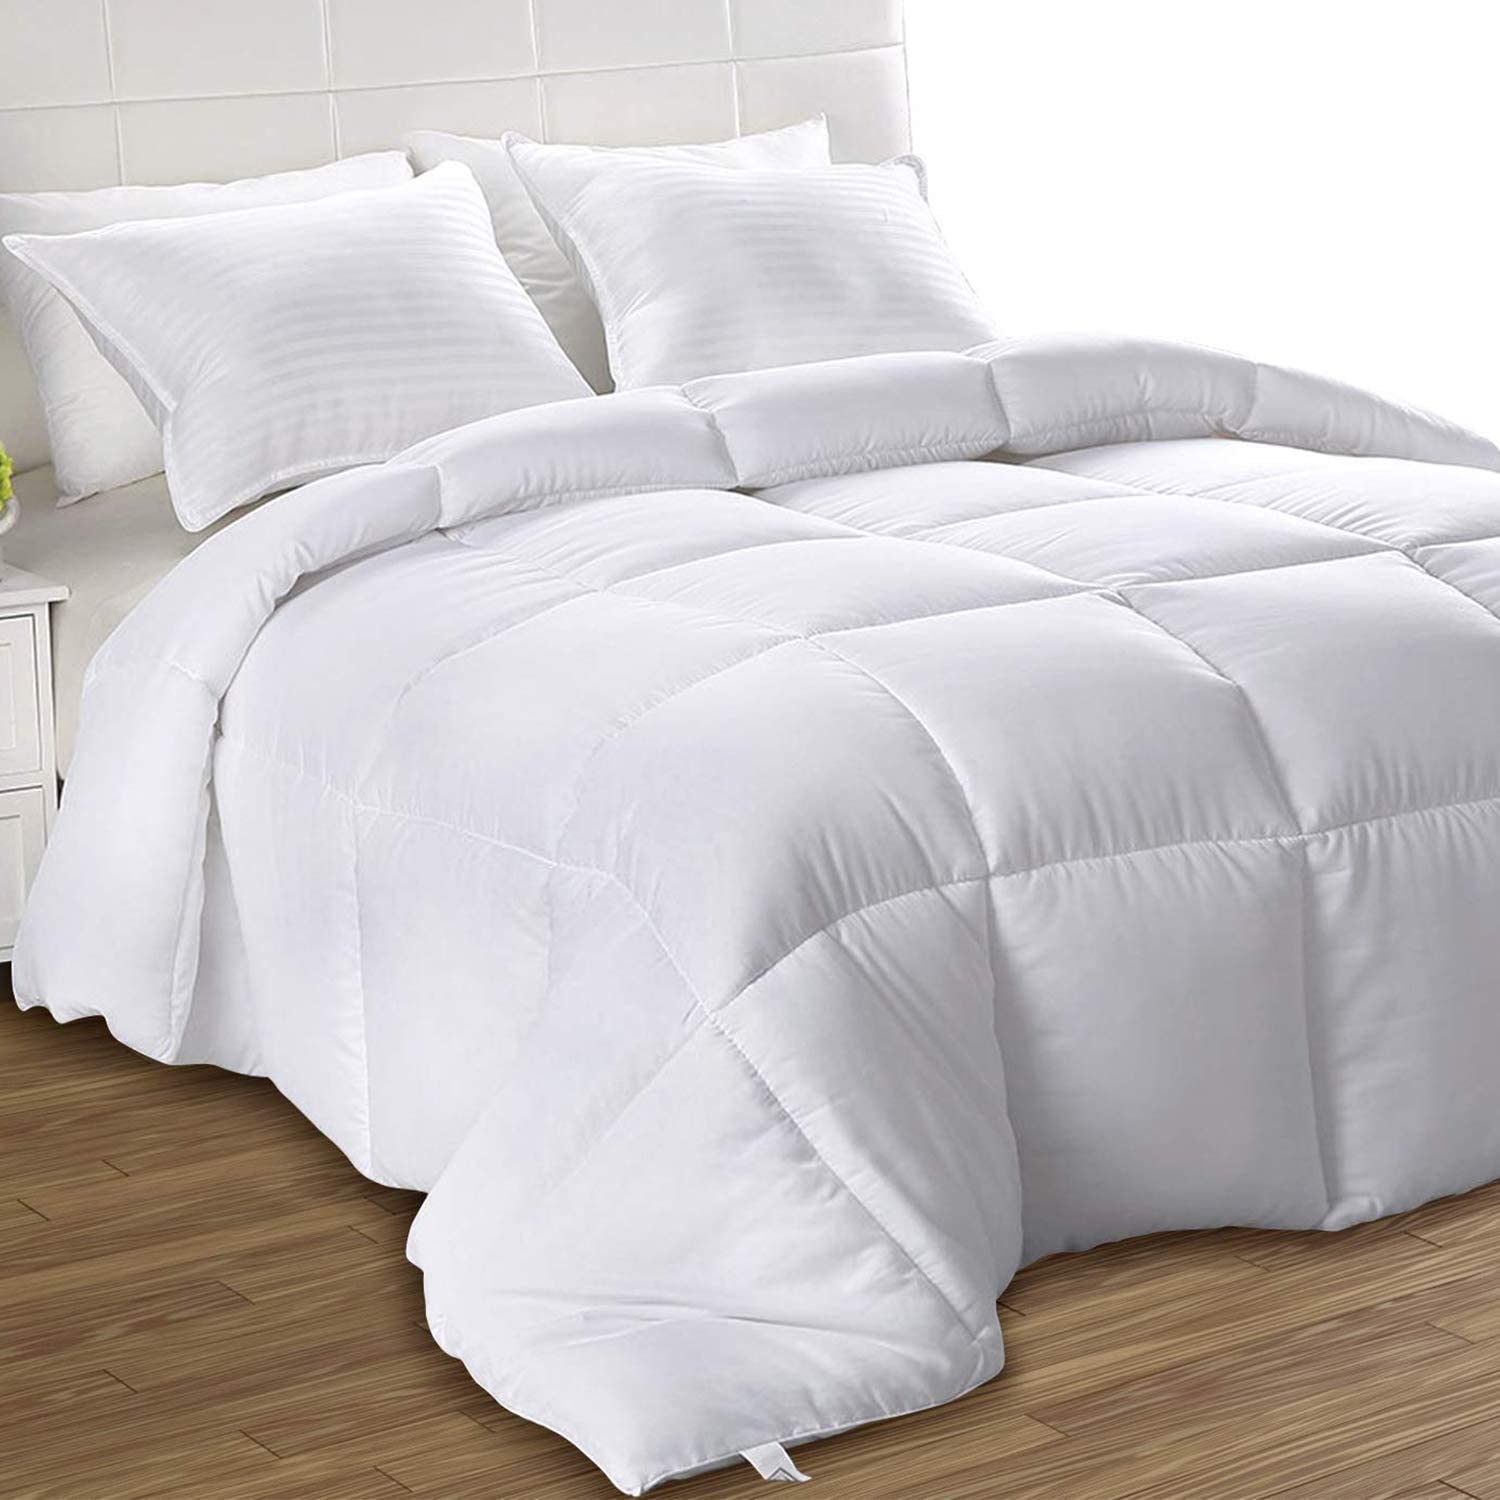 Utopia Bedding Down Alternative Comforter (Twin, White) - All Season  Comforter - Plush Siliconized Fiberfill Duvet Insert - Box Stitched